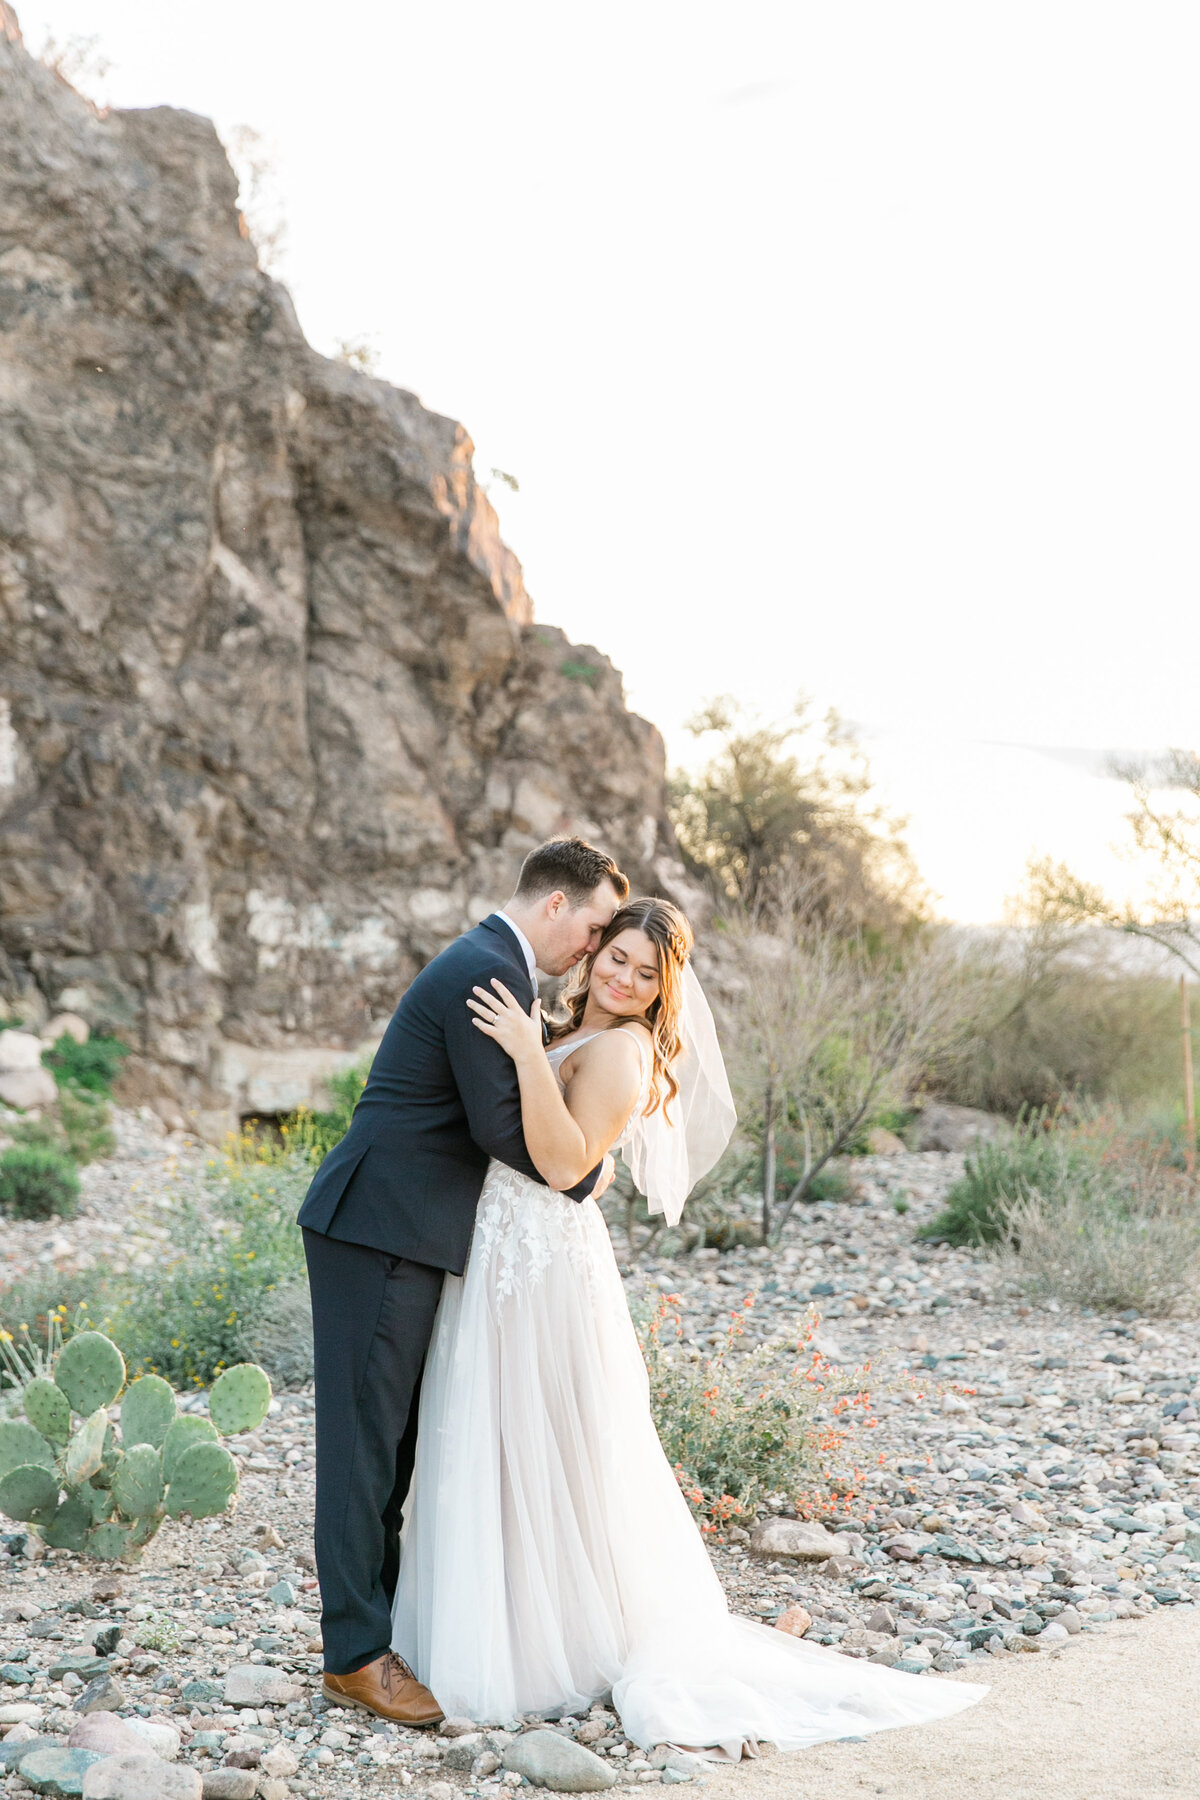 Karlie Colleen Photography - Arizona Backyard wedding - Brittney & Josh-230